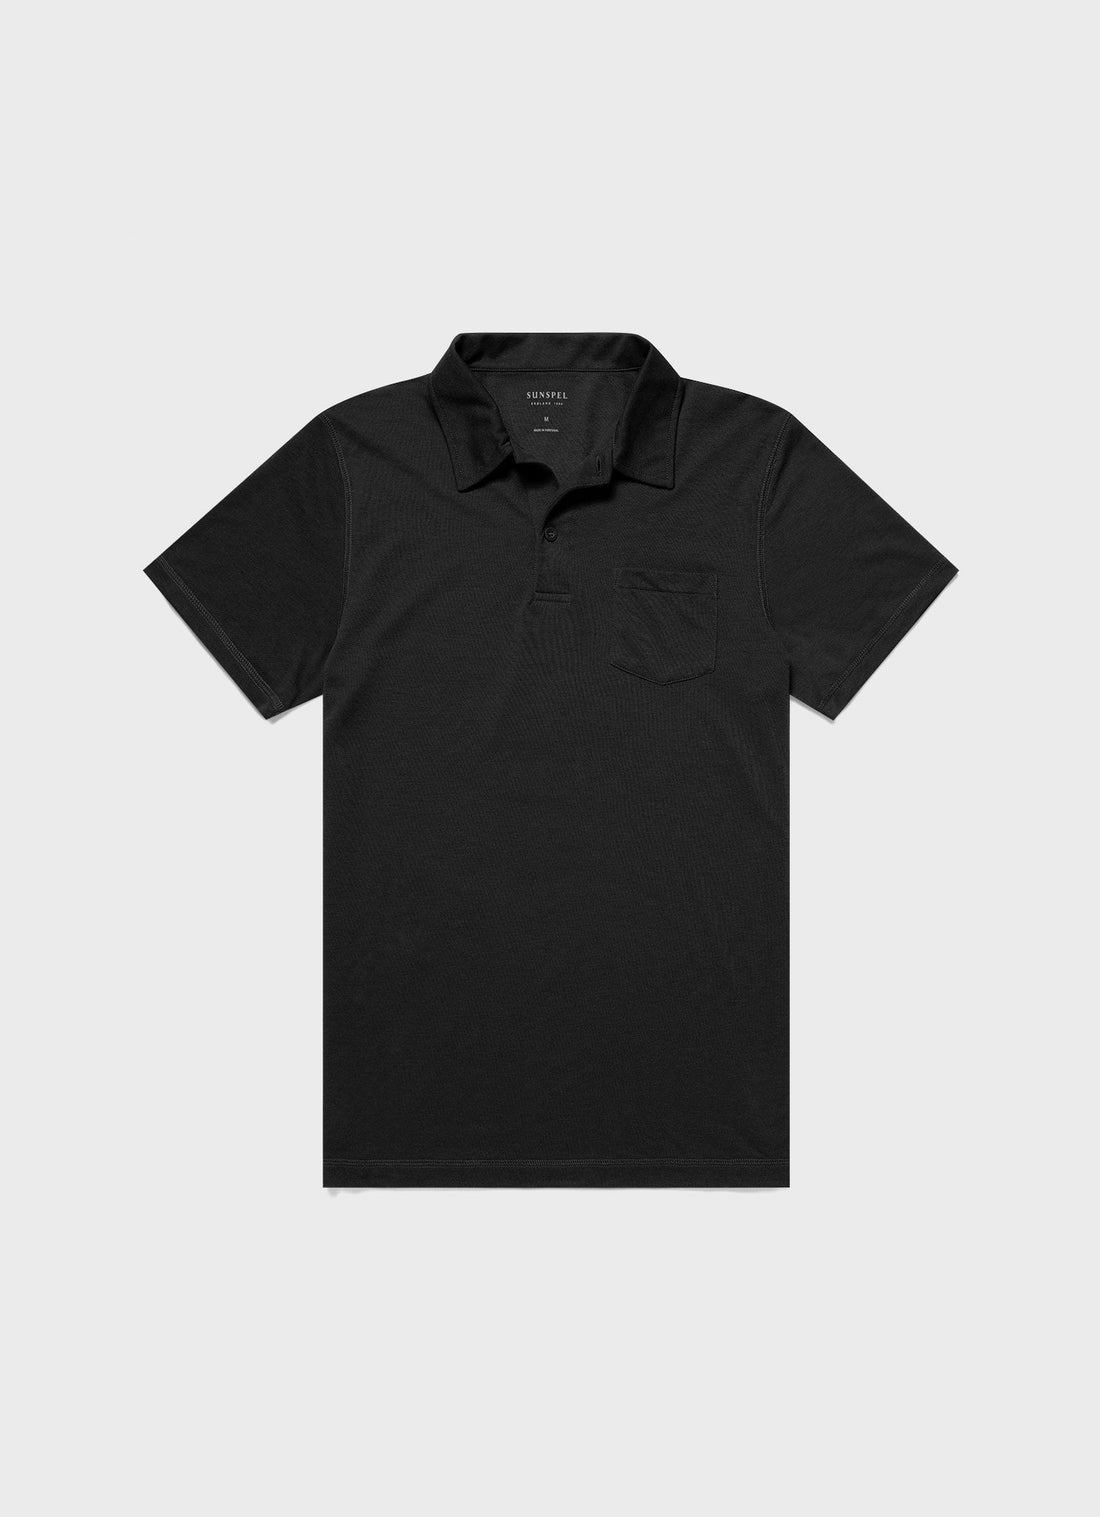 Men's DriRelease Active Polo Shirt in Black